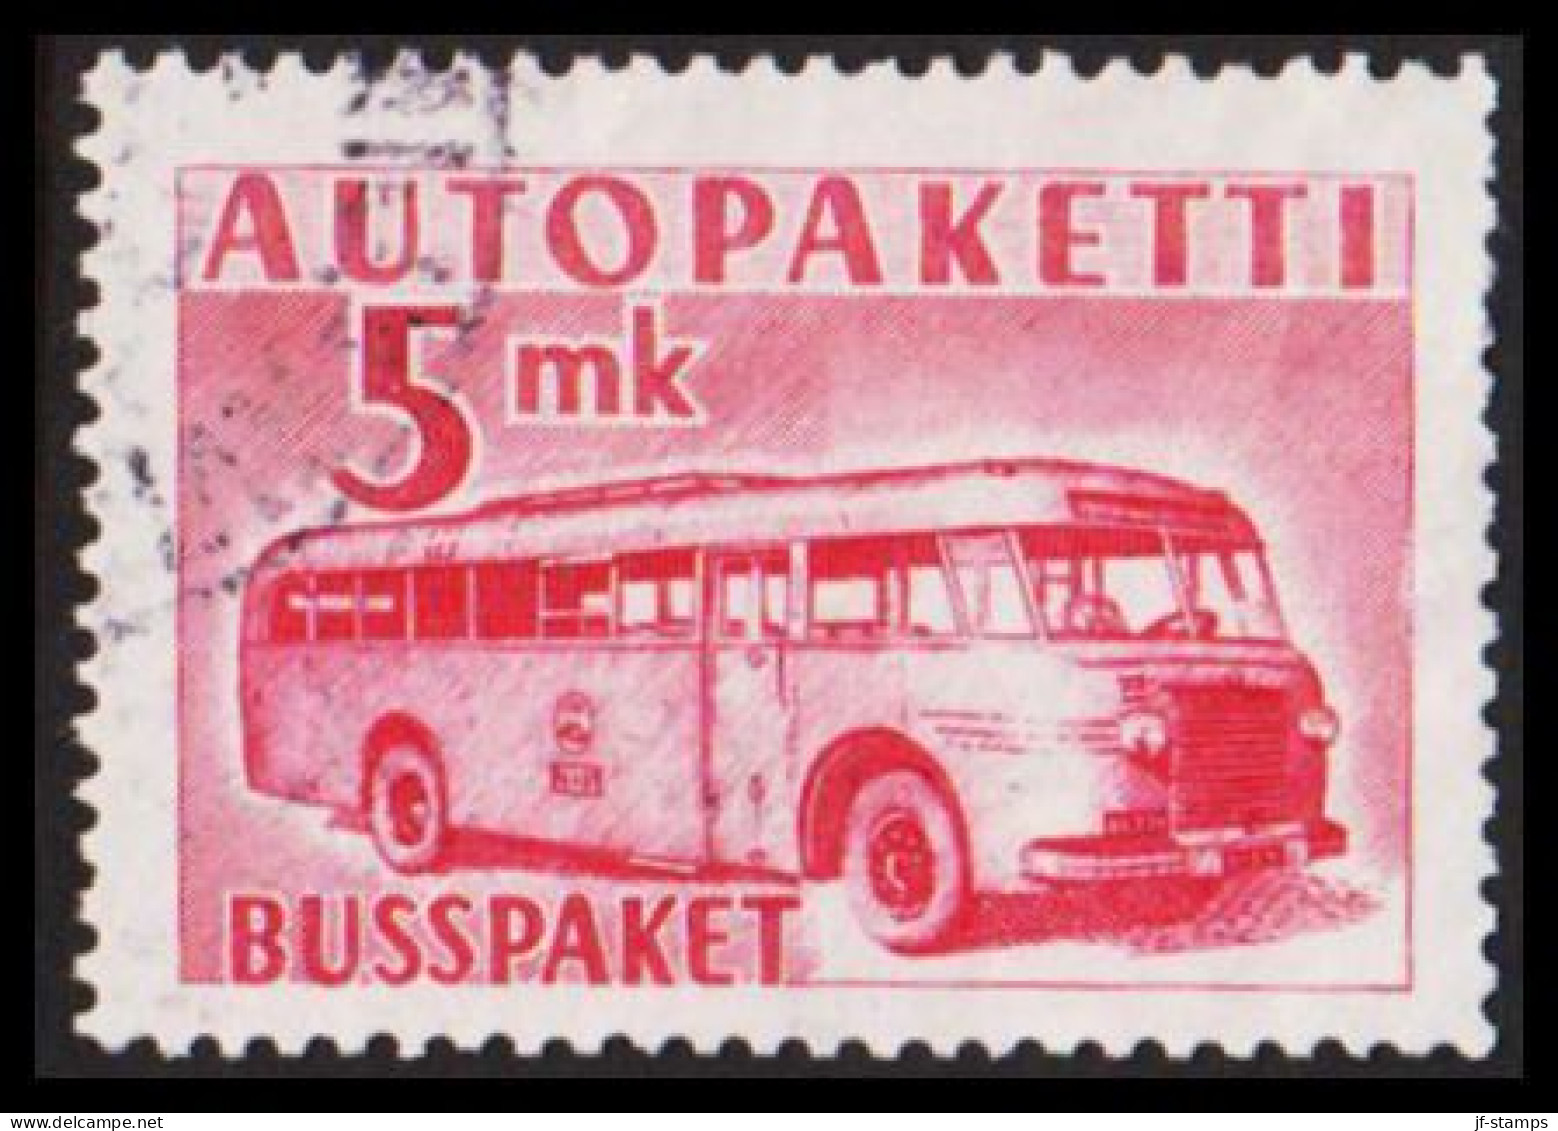 1952-1958. FINLAND. Mail Bus. 5 Mk. AUTOPAKETTI - BUSSPAKET  (Michel AP 6) - JF534378 - Envios Por Bus